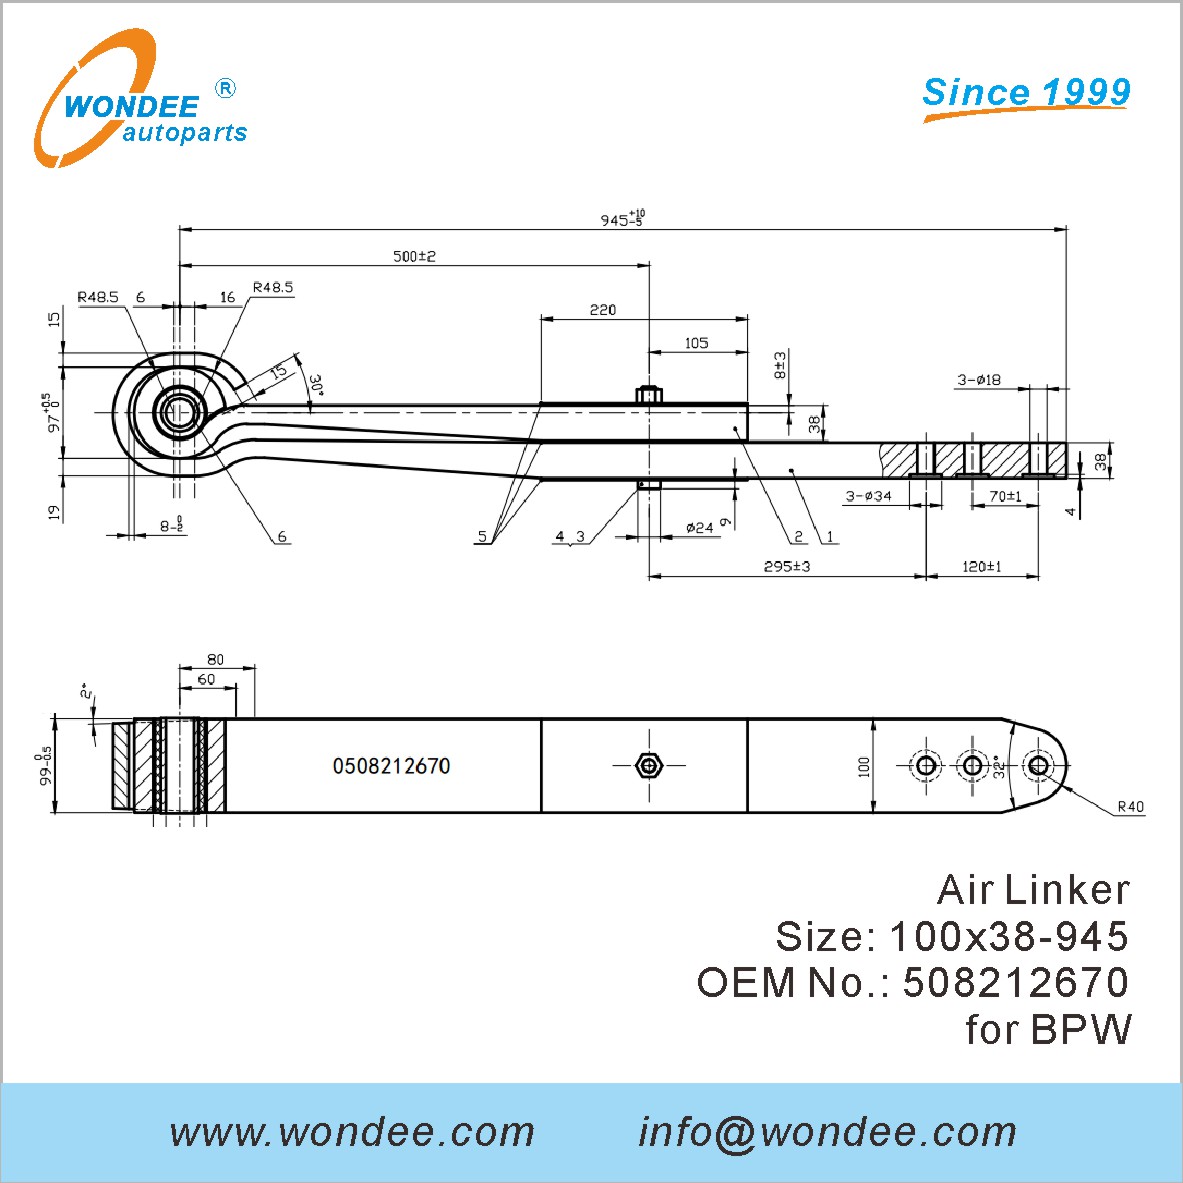 WONDEE Autoparts Air Linker OEM 508212670 for BPW